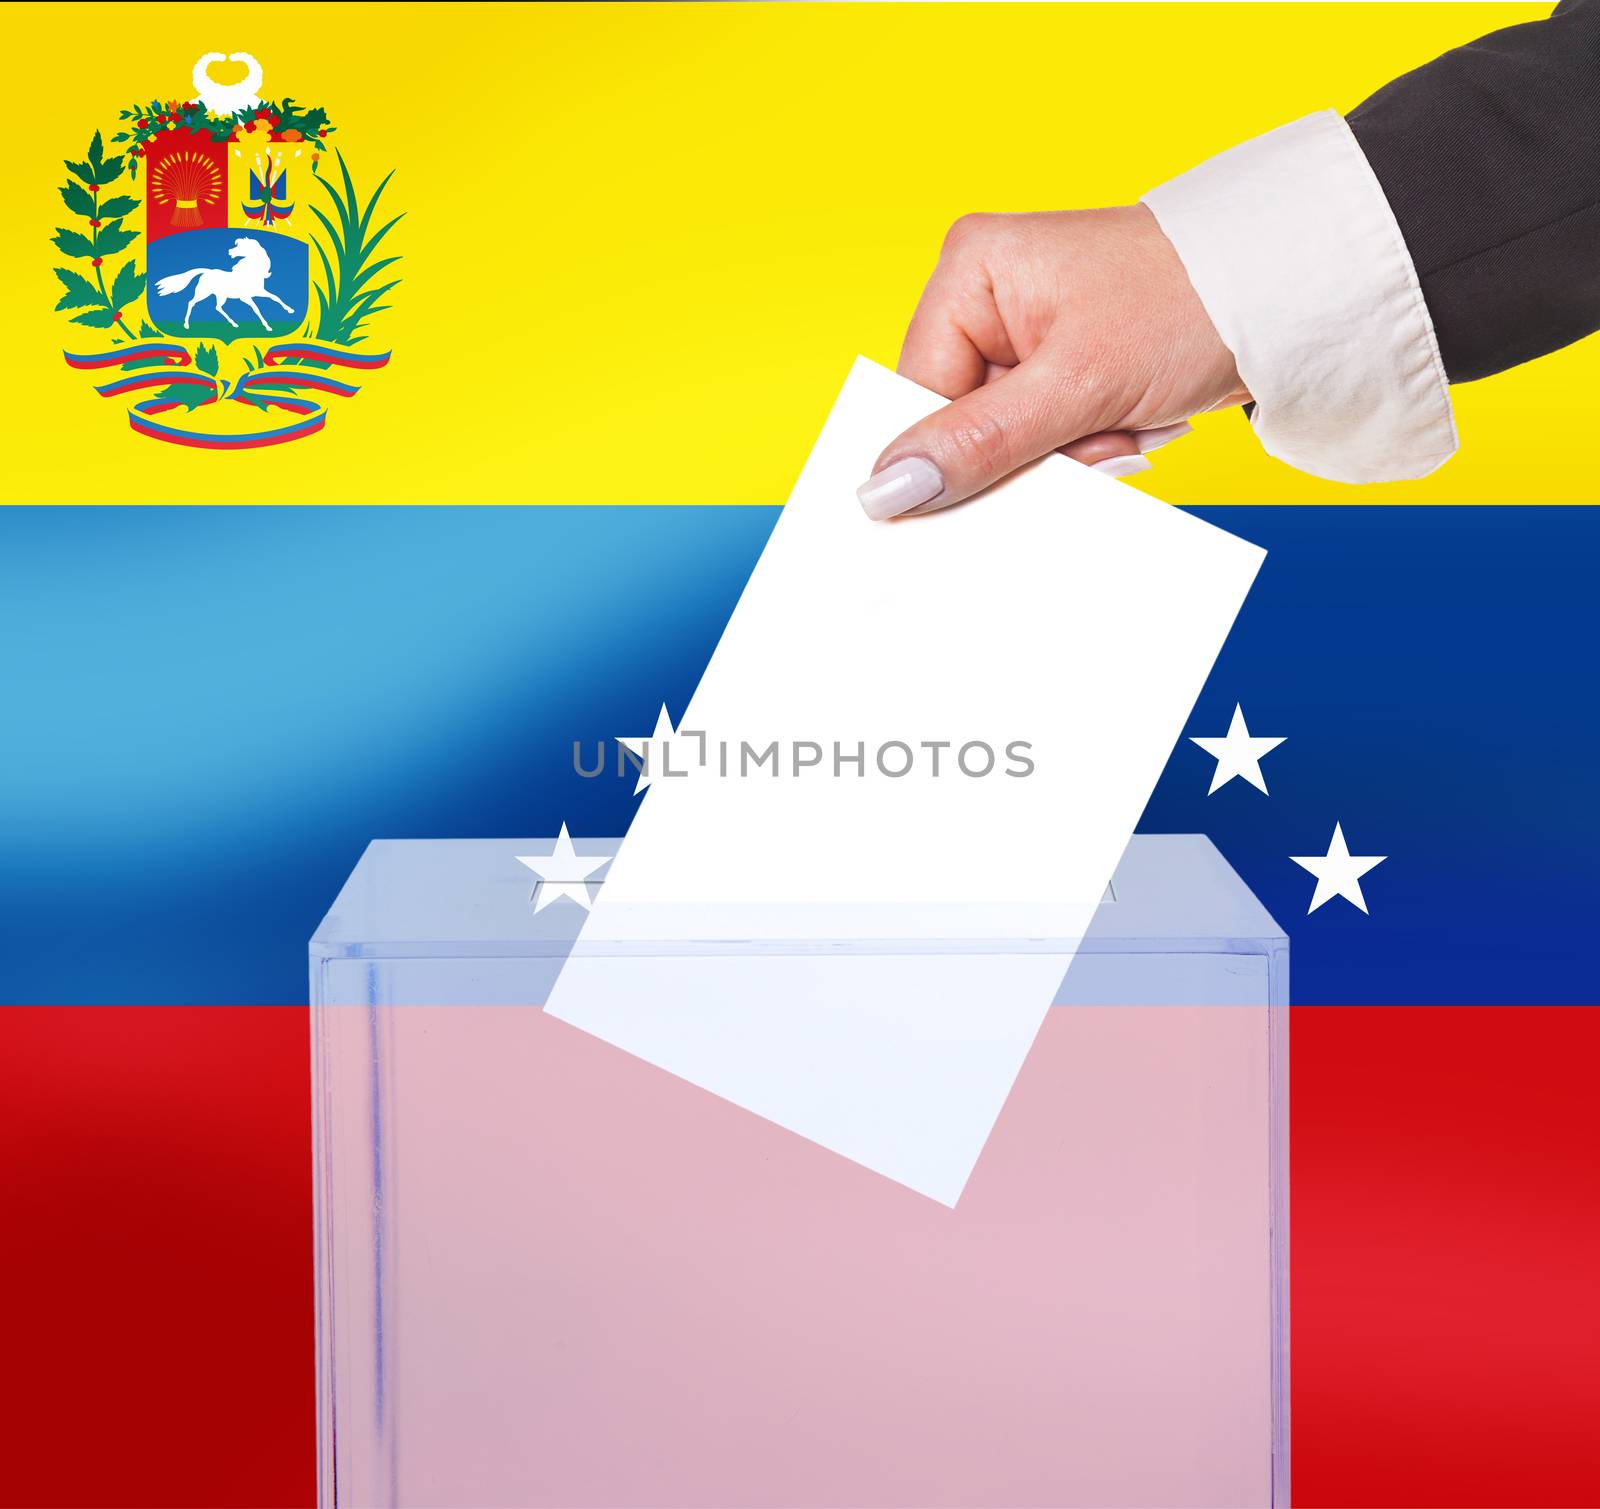 electoral vote by ballot, under the Venezuela flag